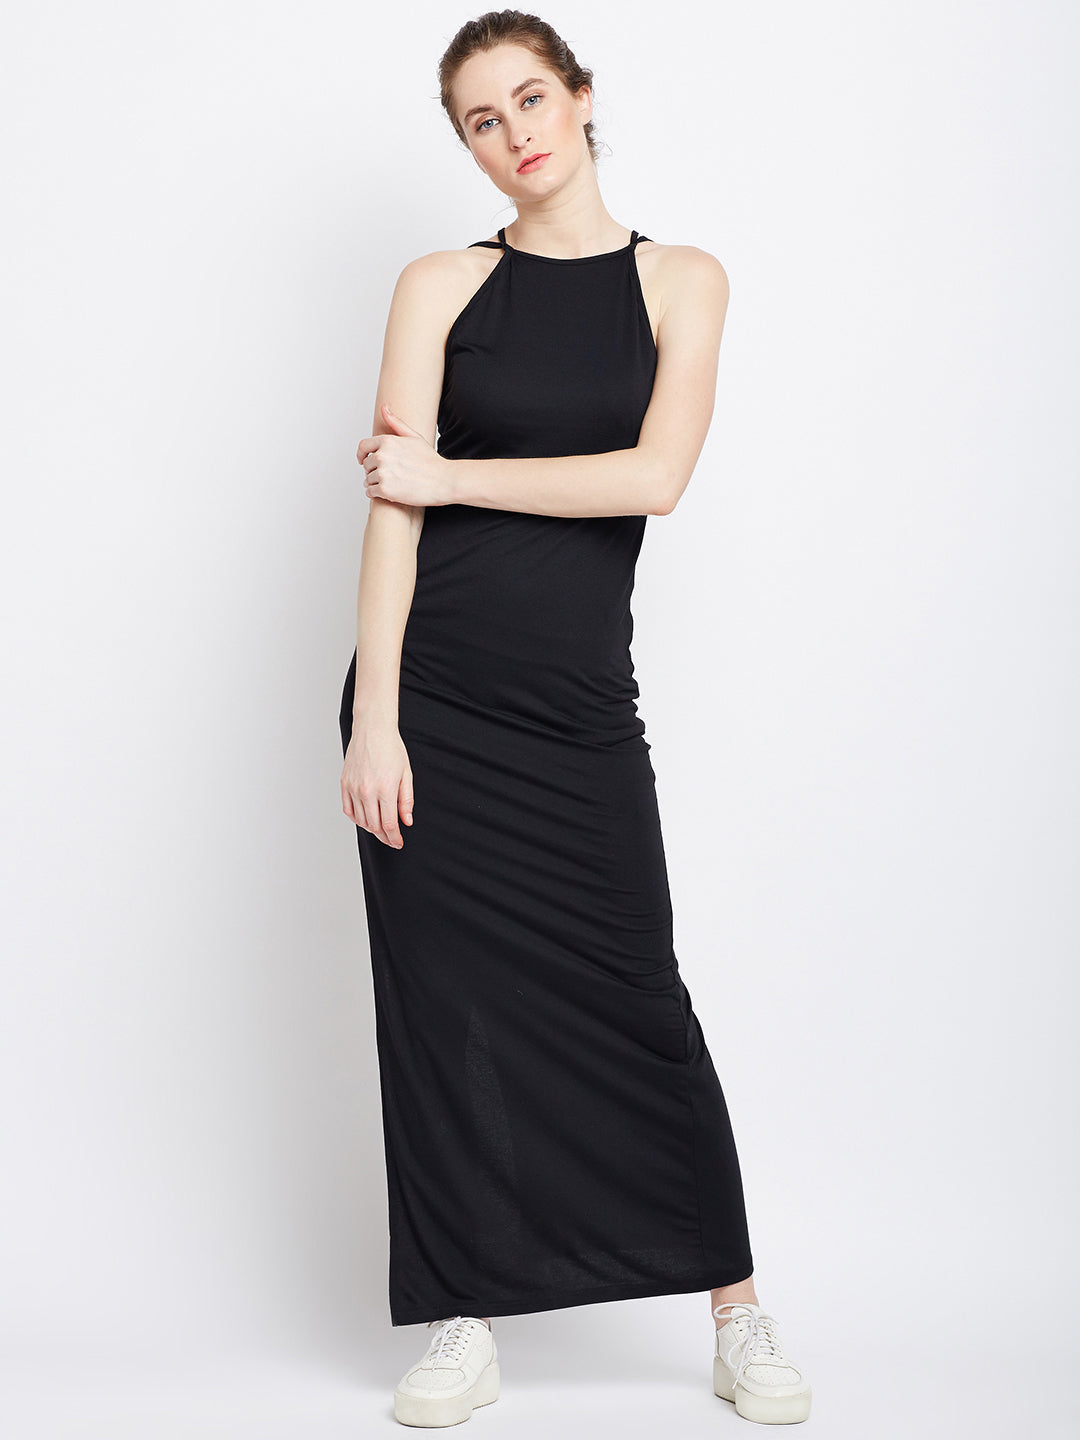 Black Solid Sheath Dress - Berrylush